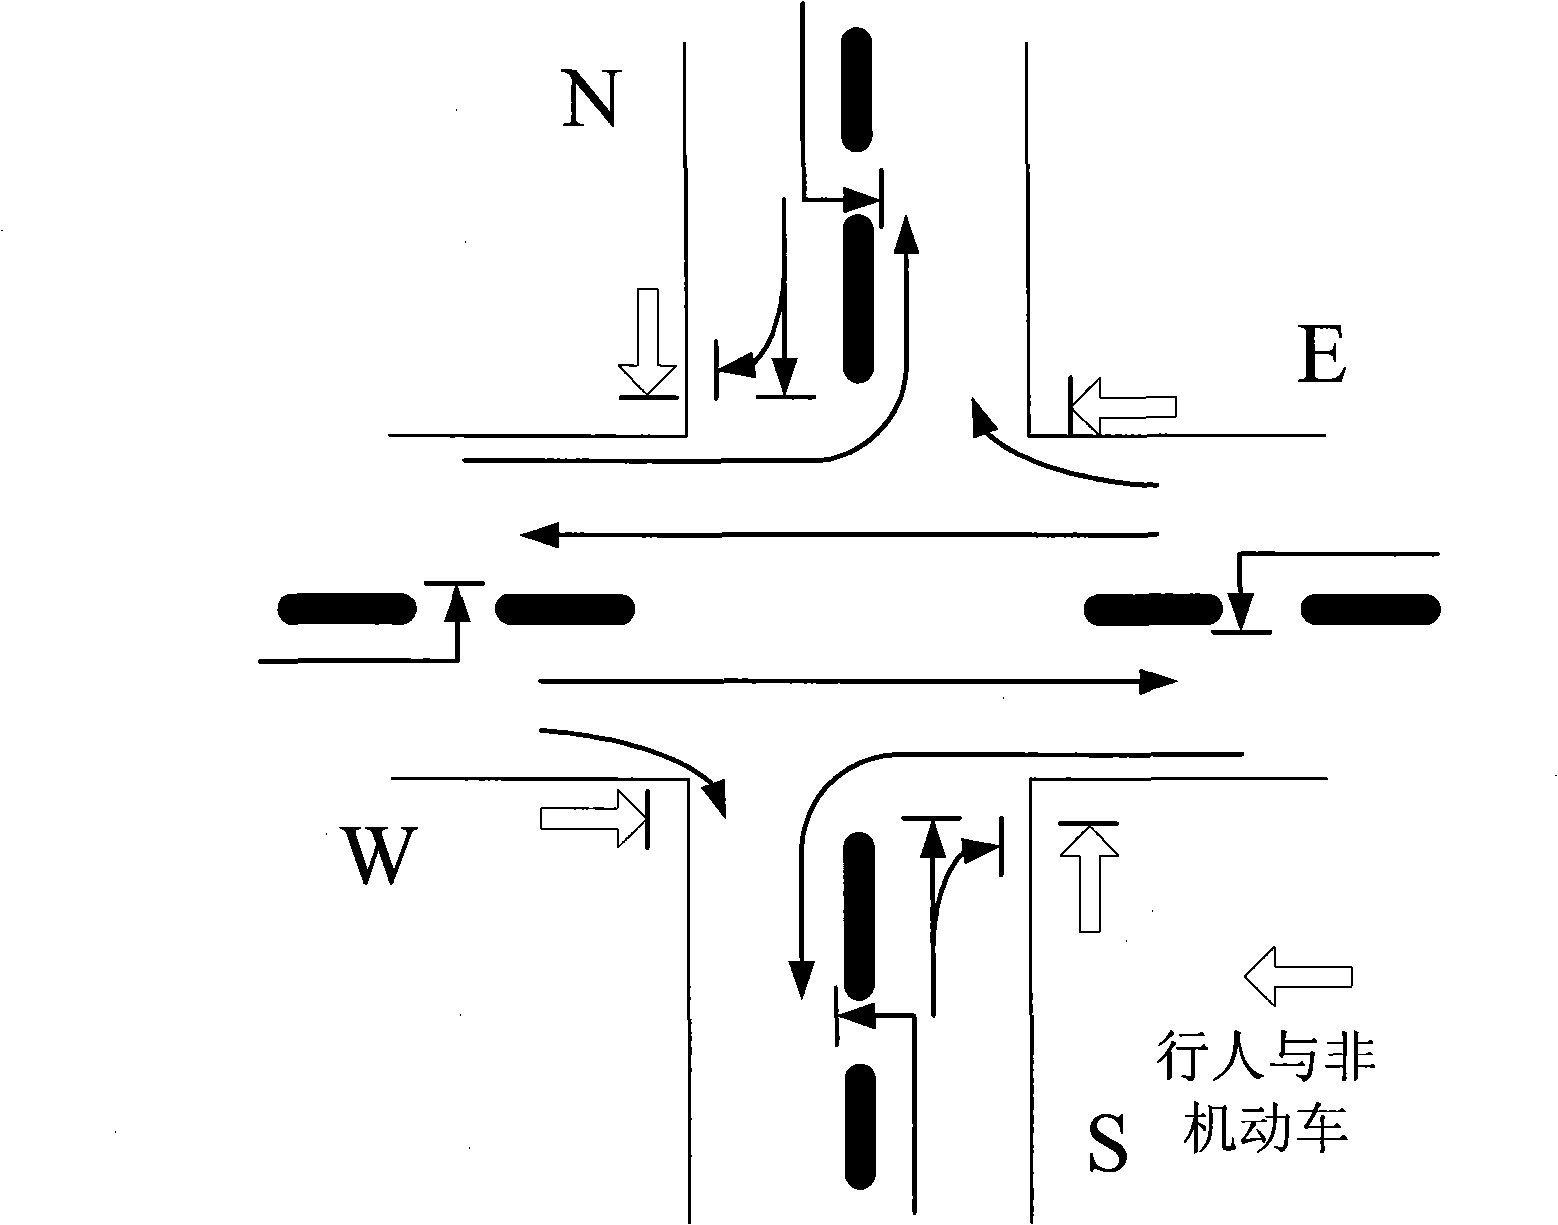 Road grade crossing non-conflict traffic mode arrangement and control method